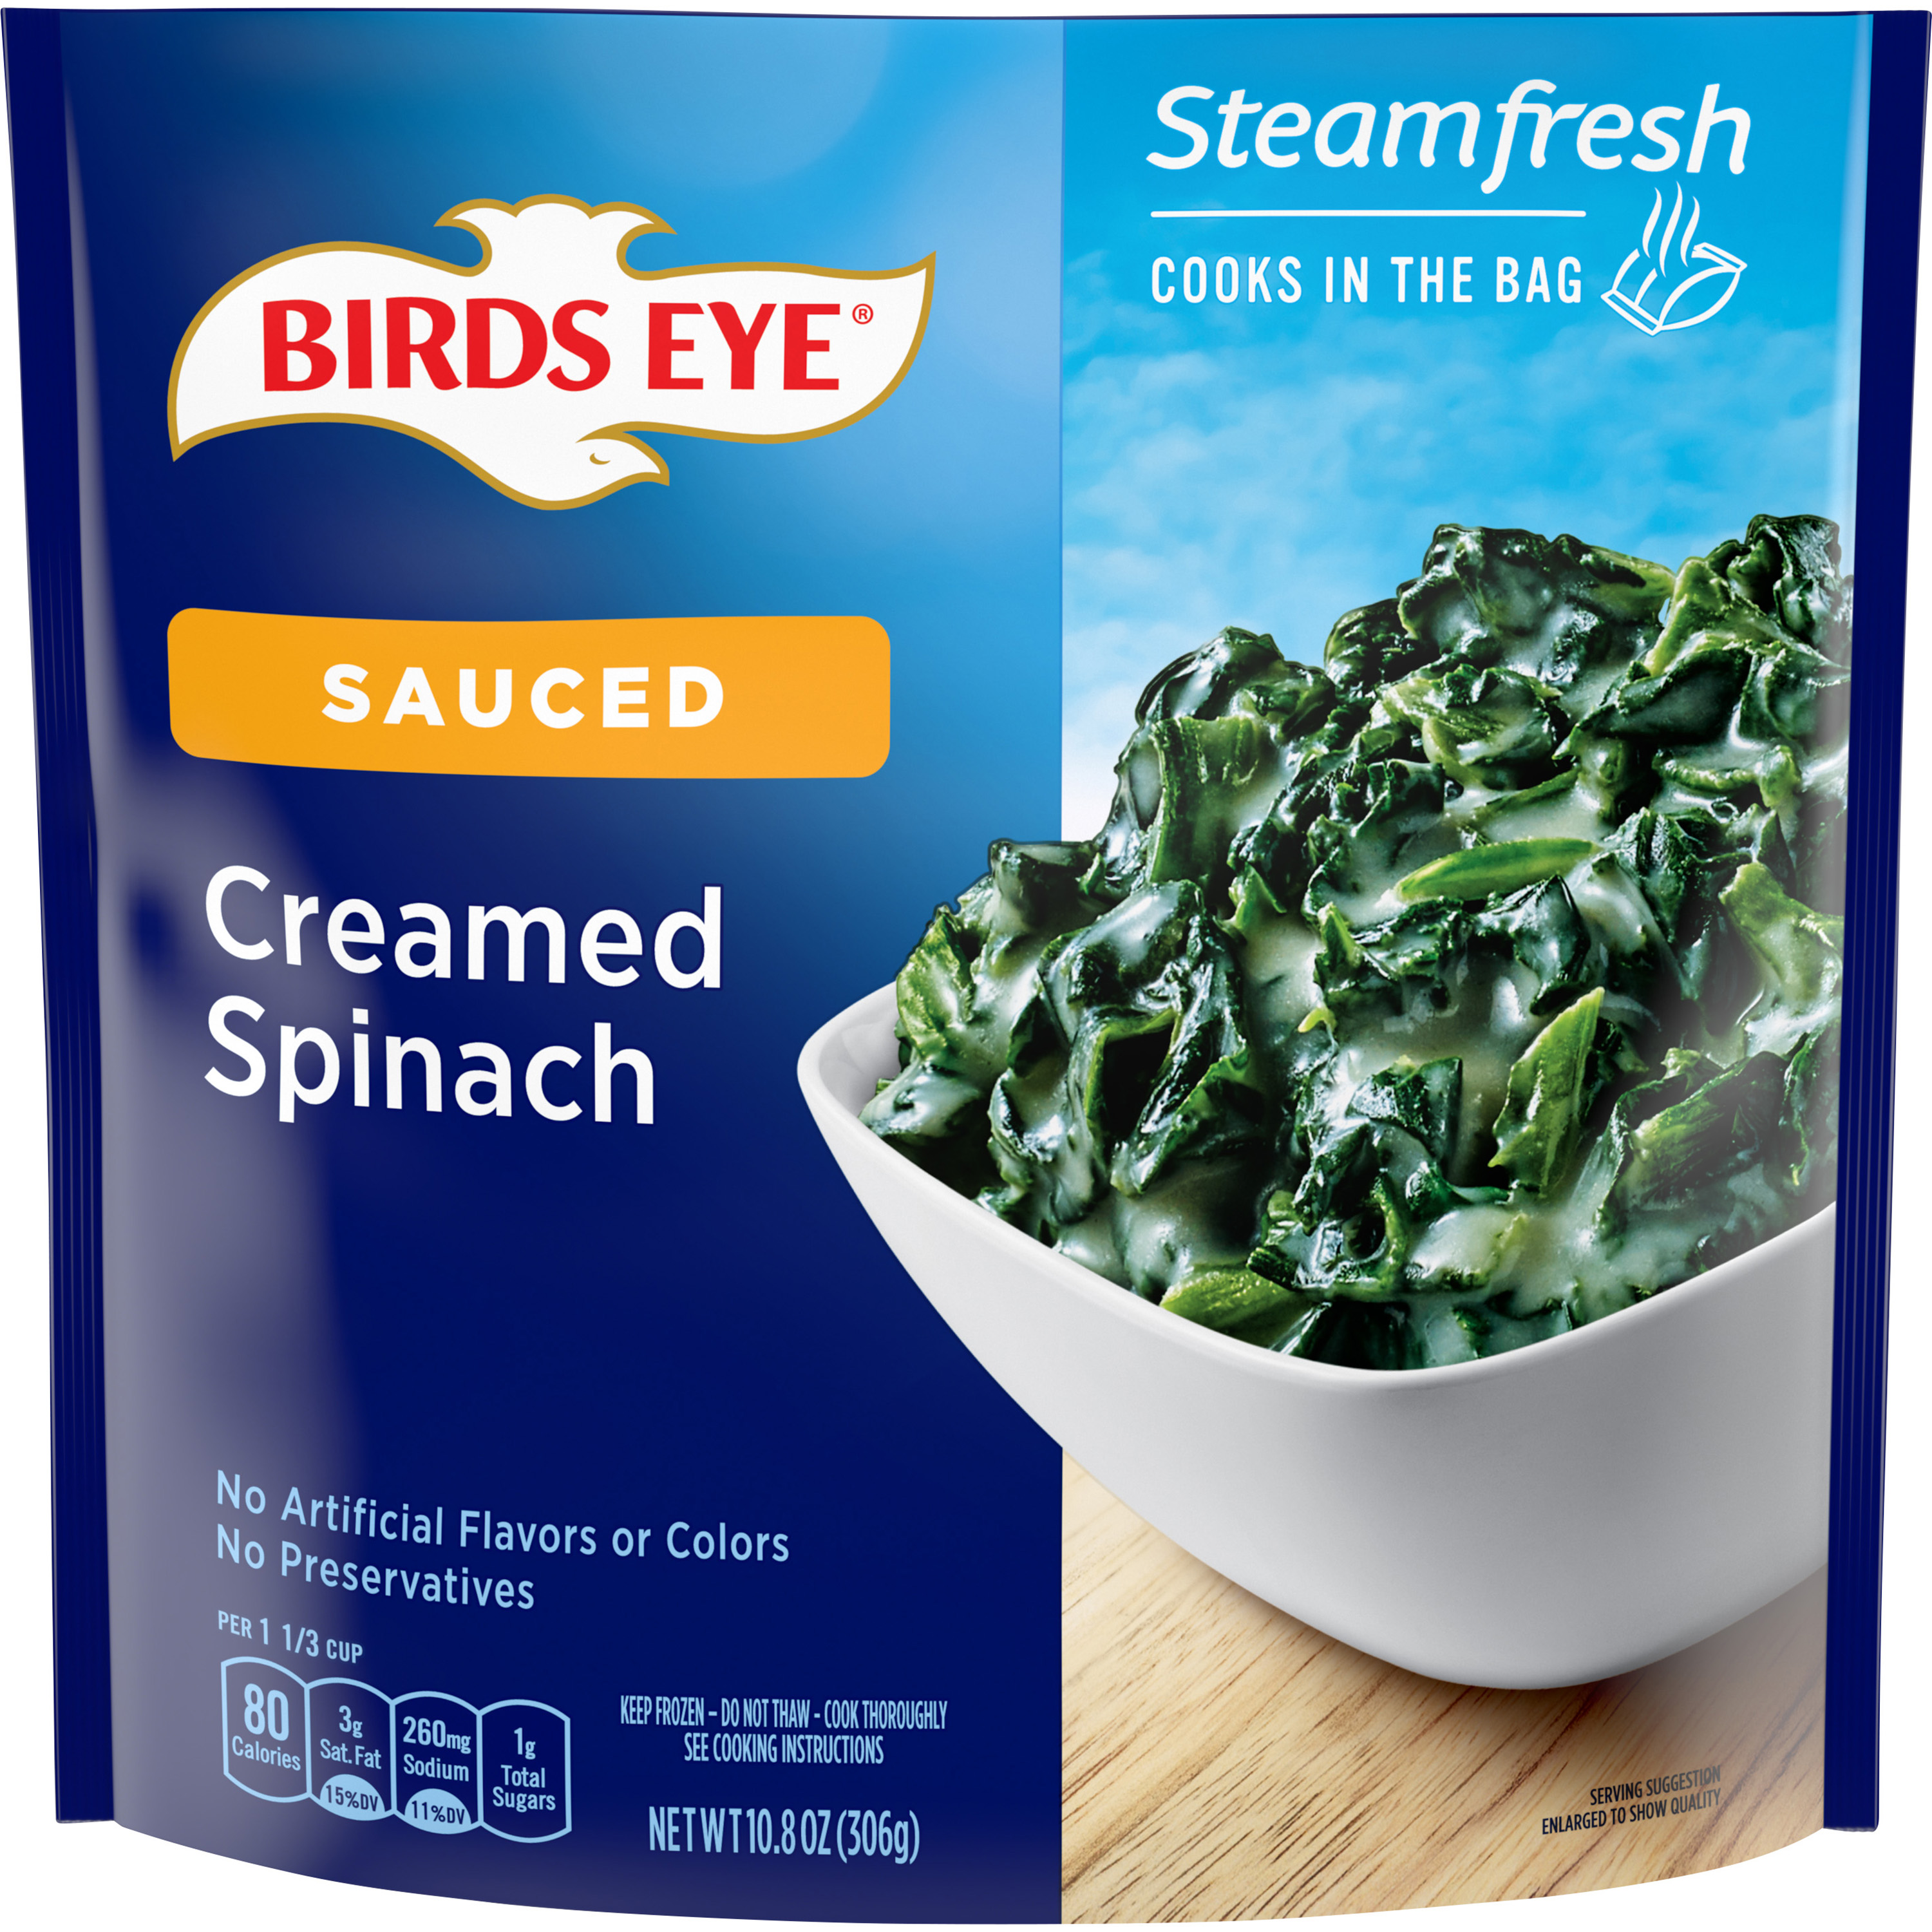 Birds Eye Steamfresh Chef’s Favorites Sauced Creamed Spinach